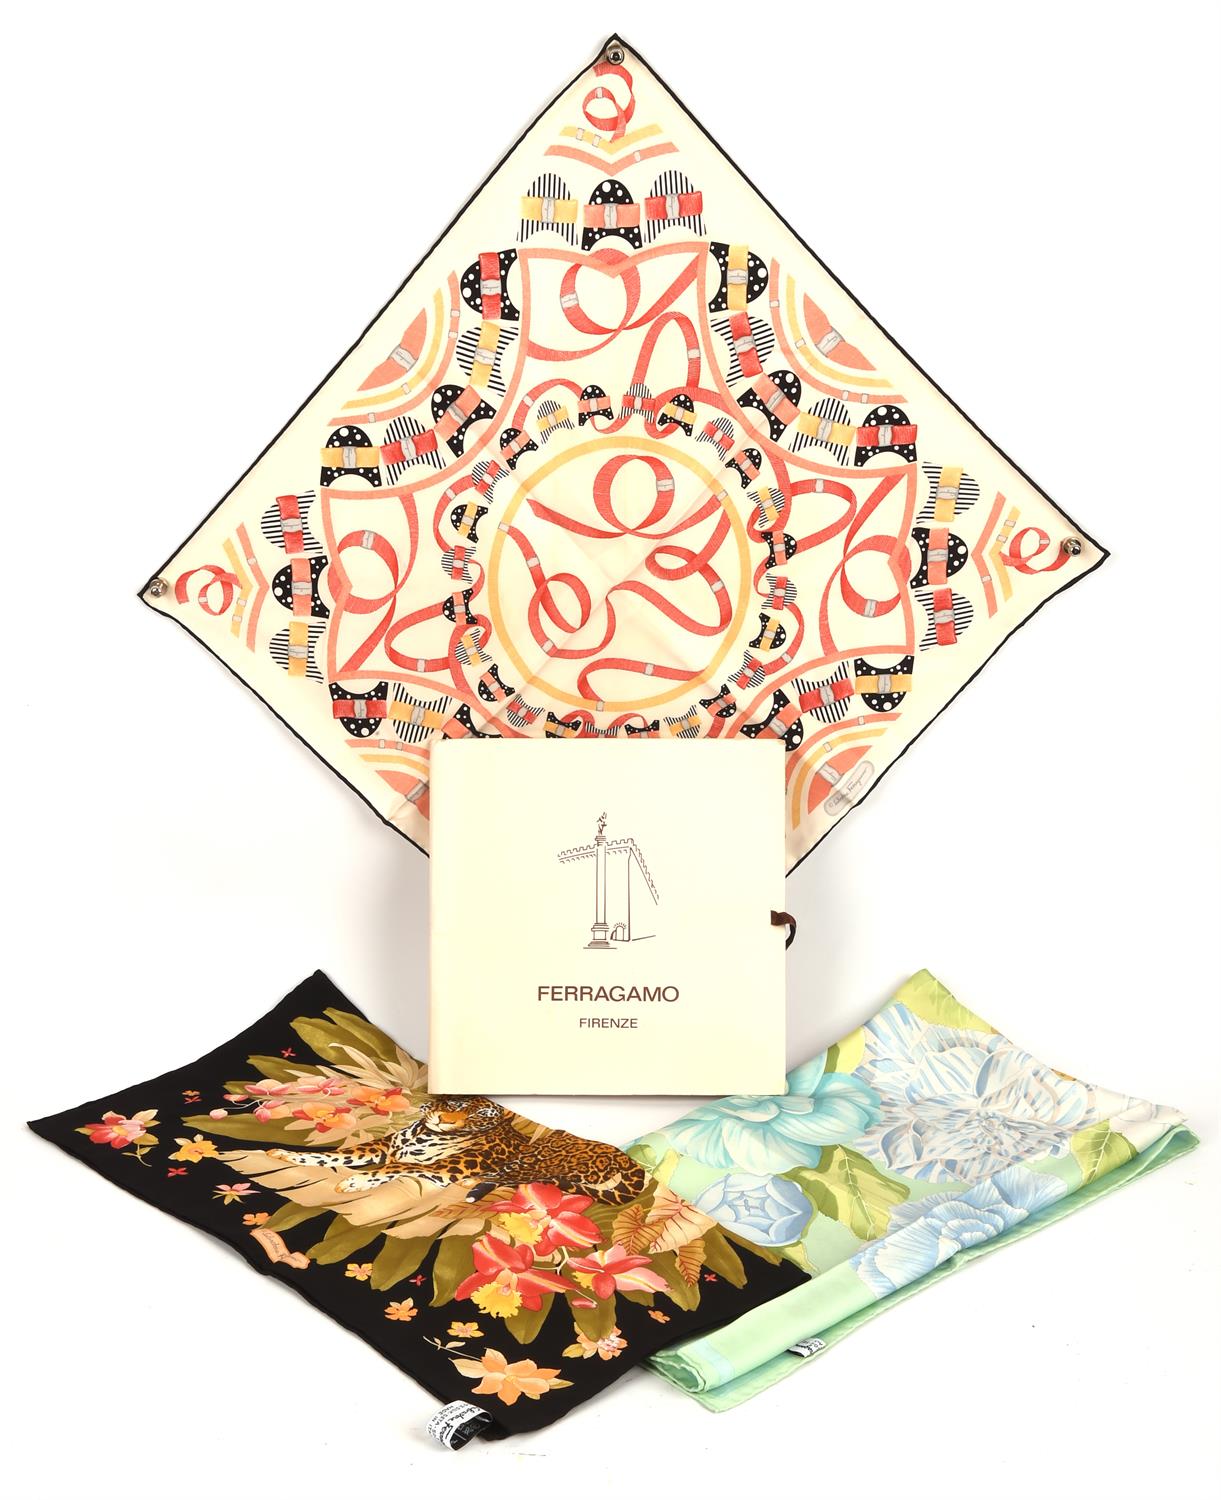 SALVATORRE FERRAGAMO three ladies silk scarves in original envelope package.